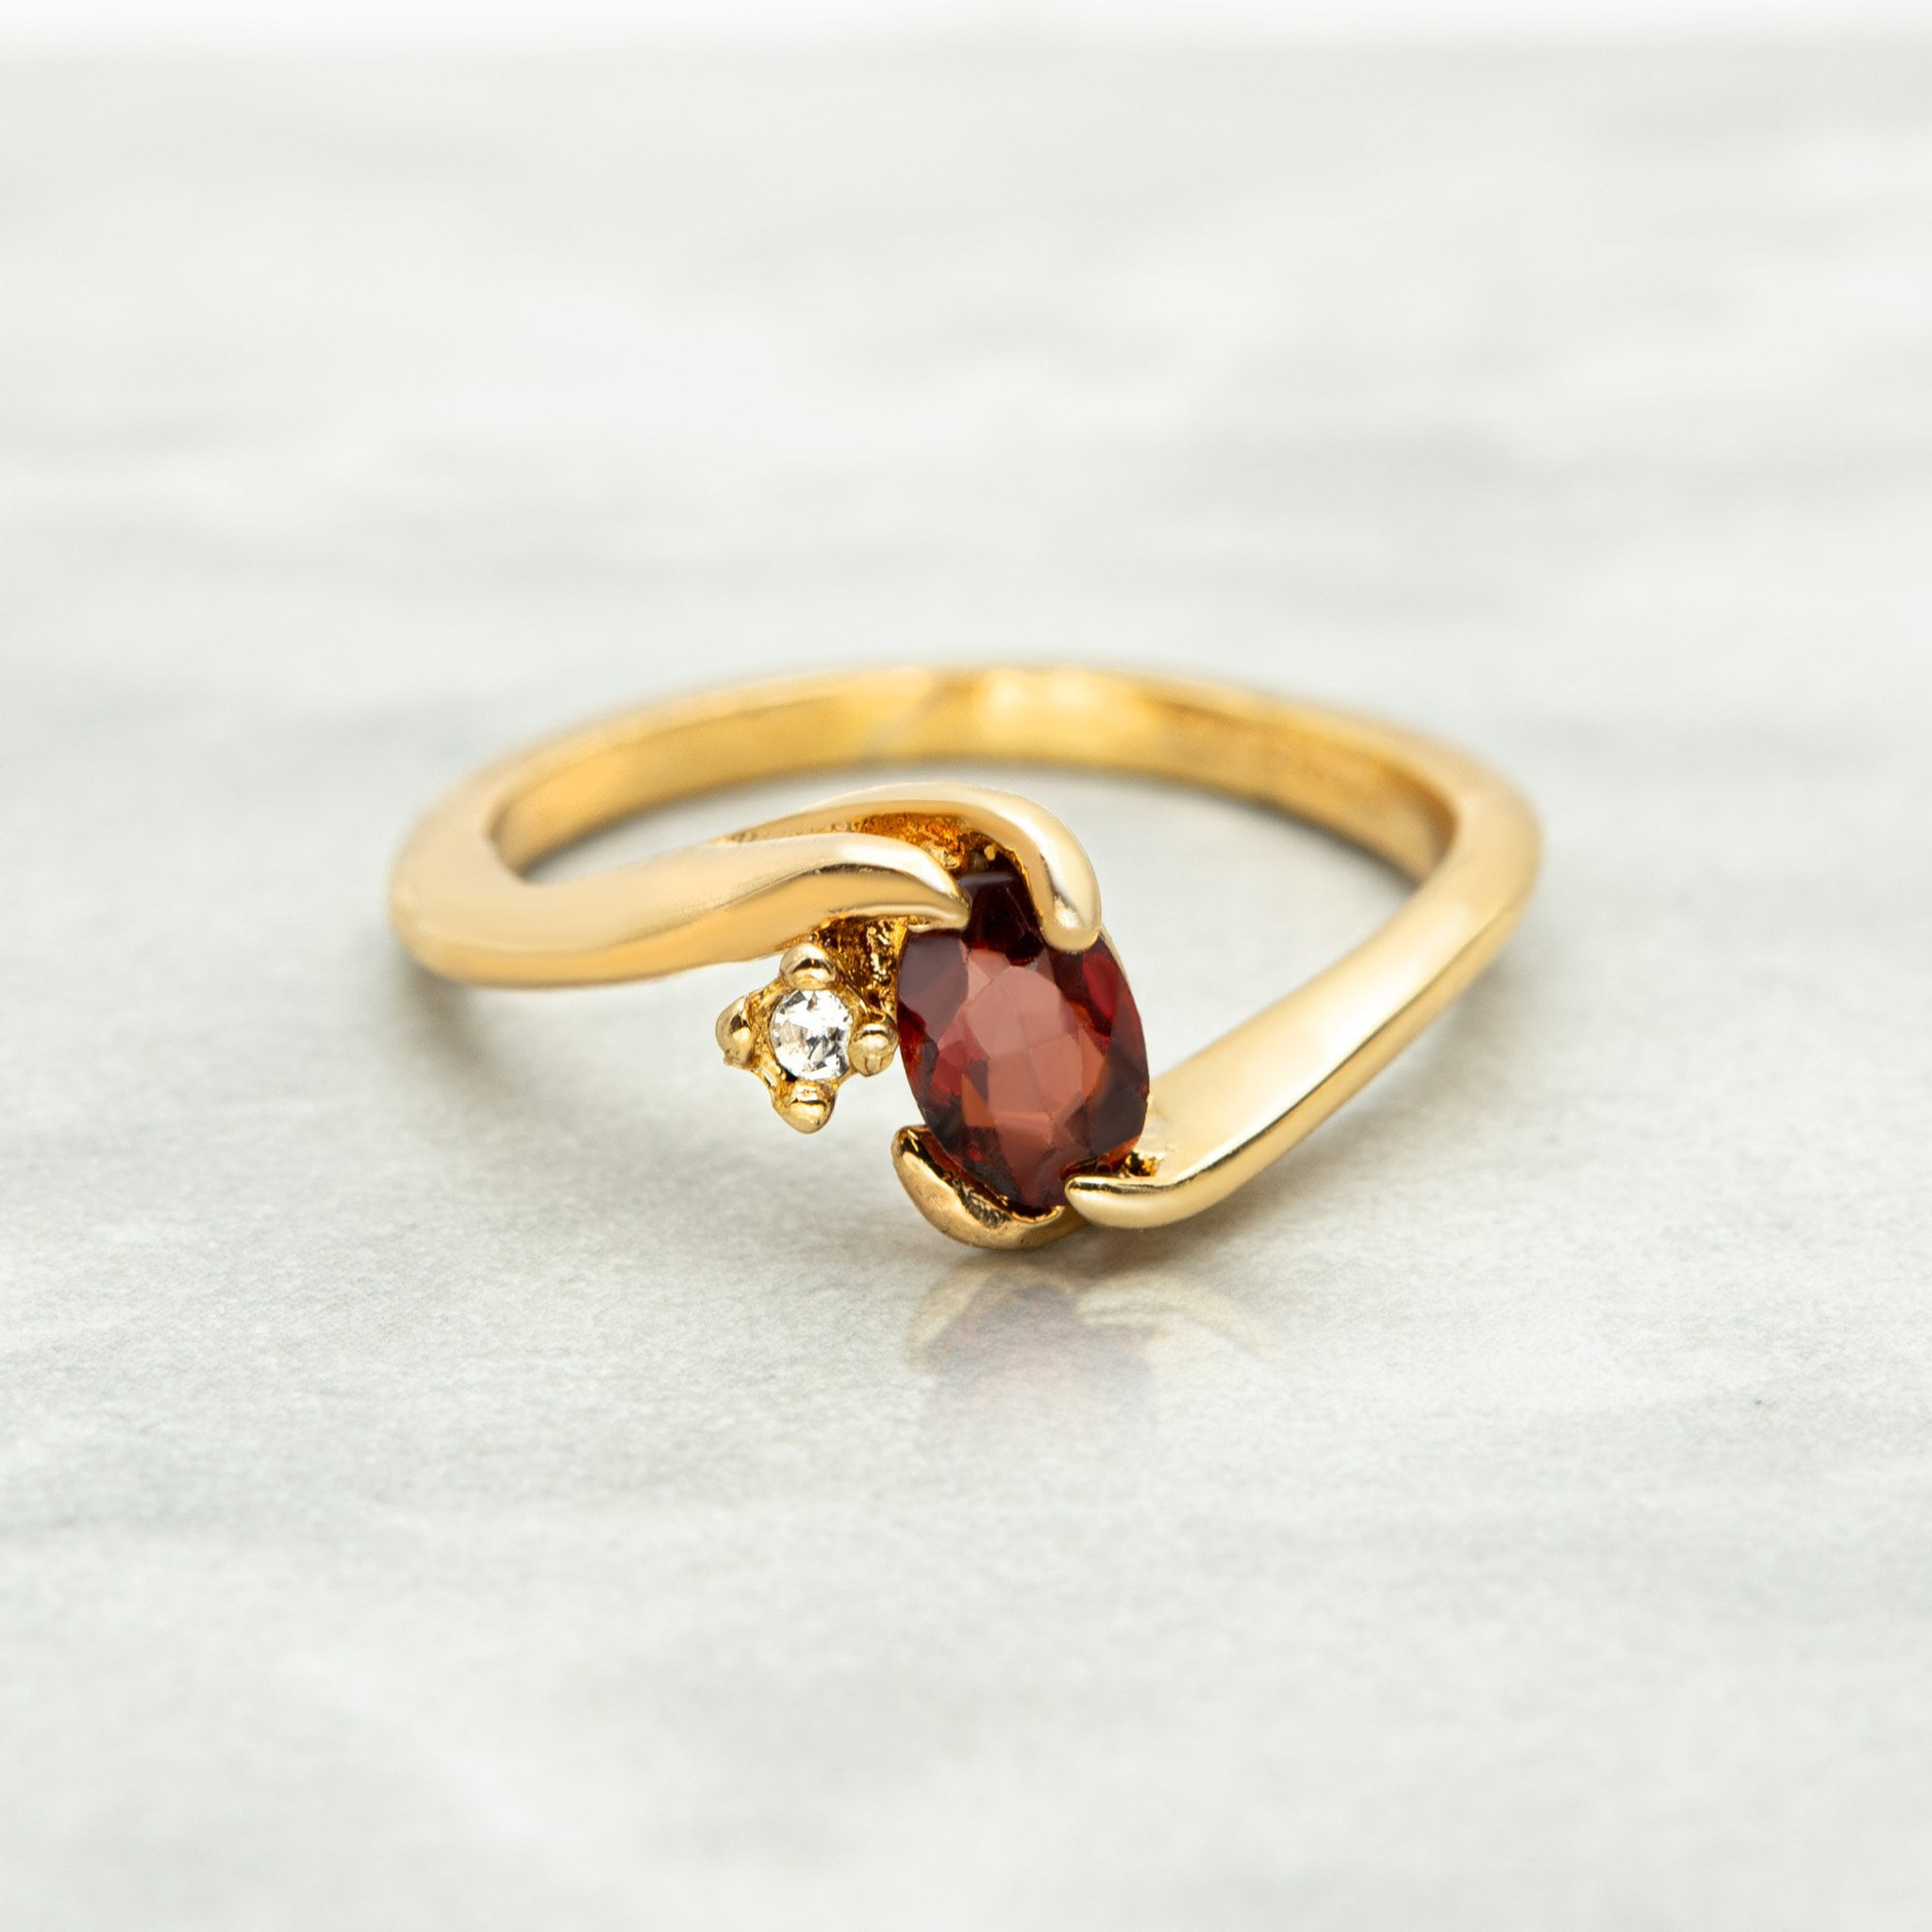 Buy Ruby Stone Ring Online, Manik Ring Gold Brass Price